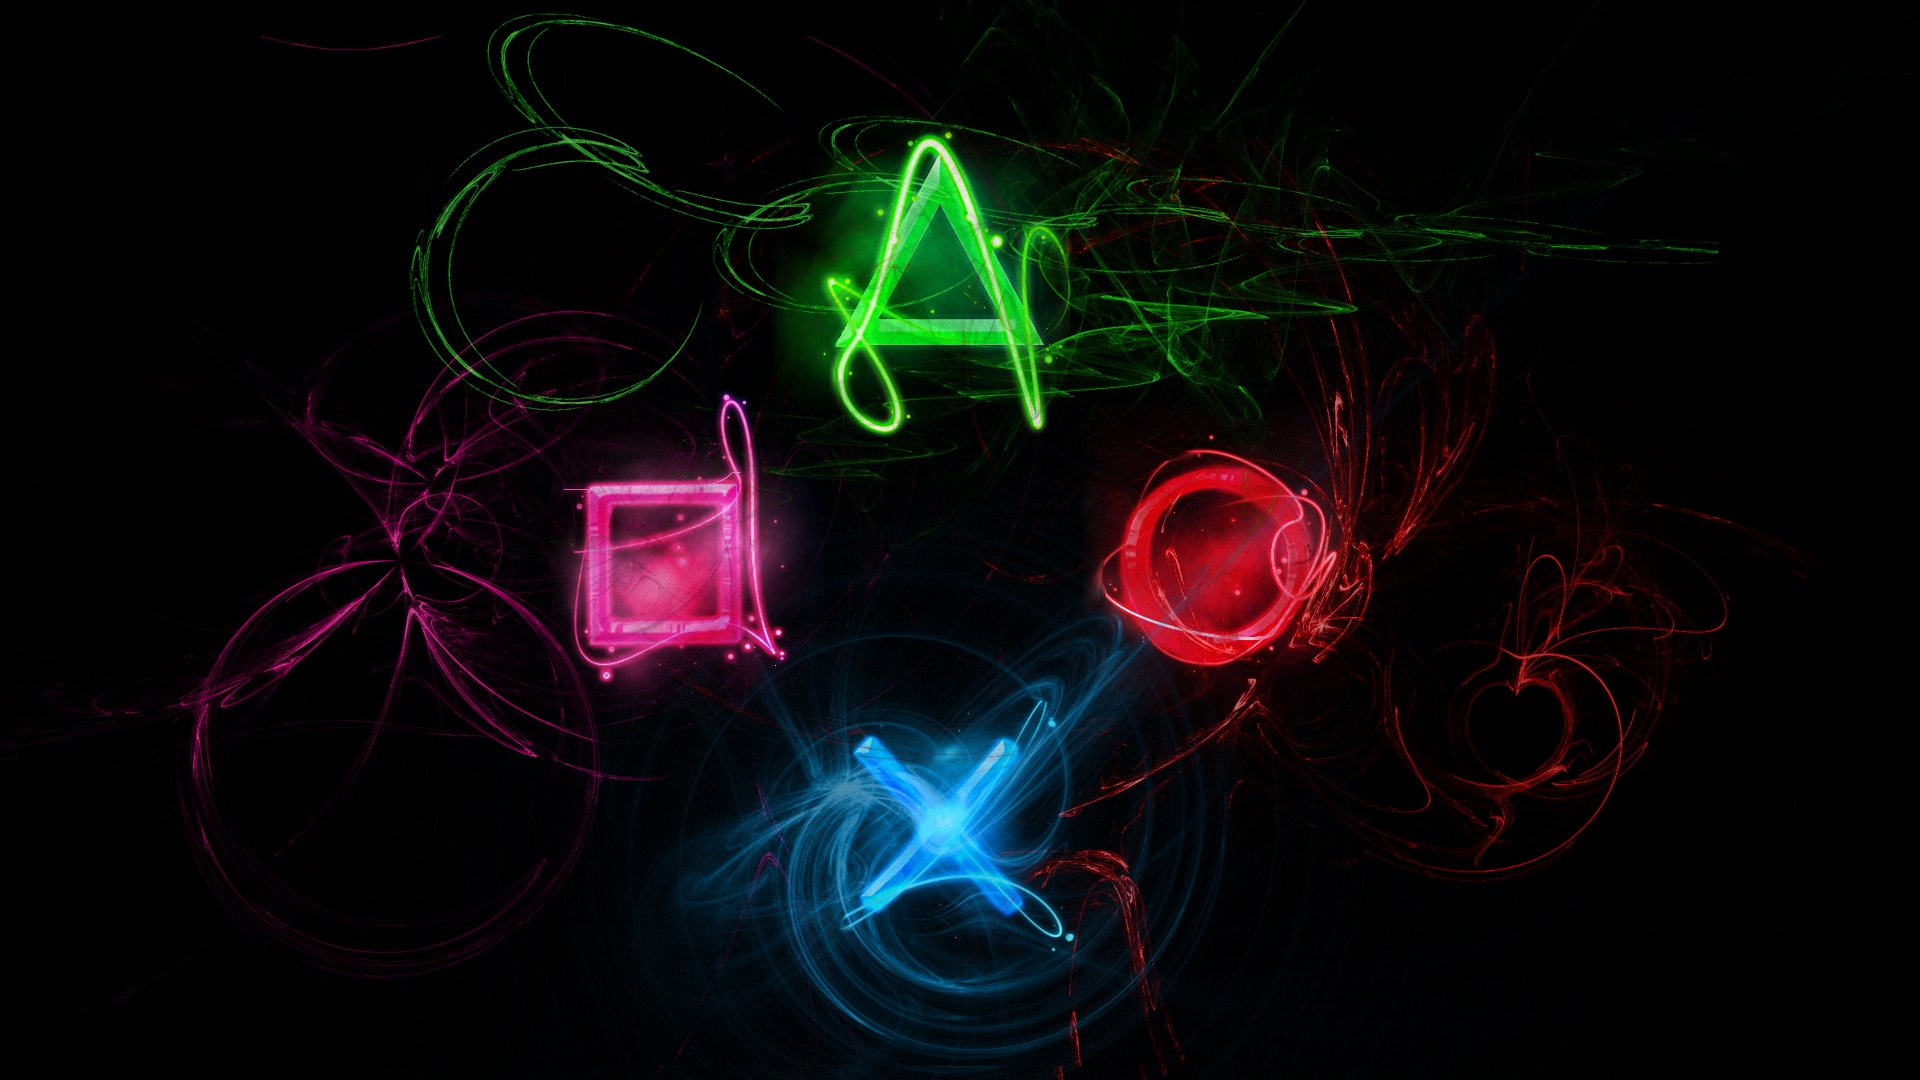 PS3 symbols neon splash hd wallpaper background   HD Wallpapers